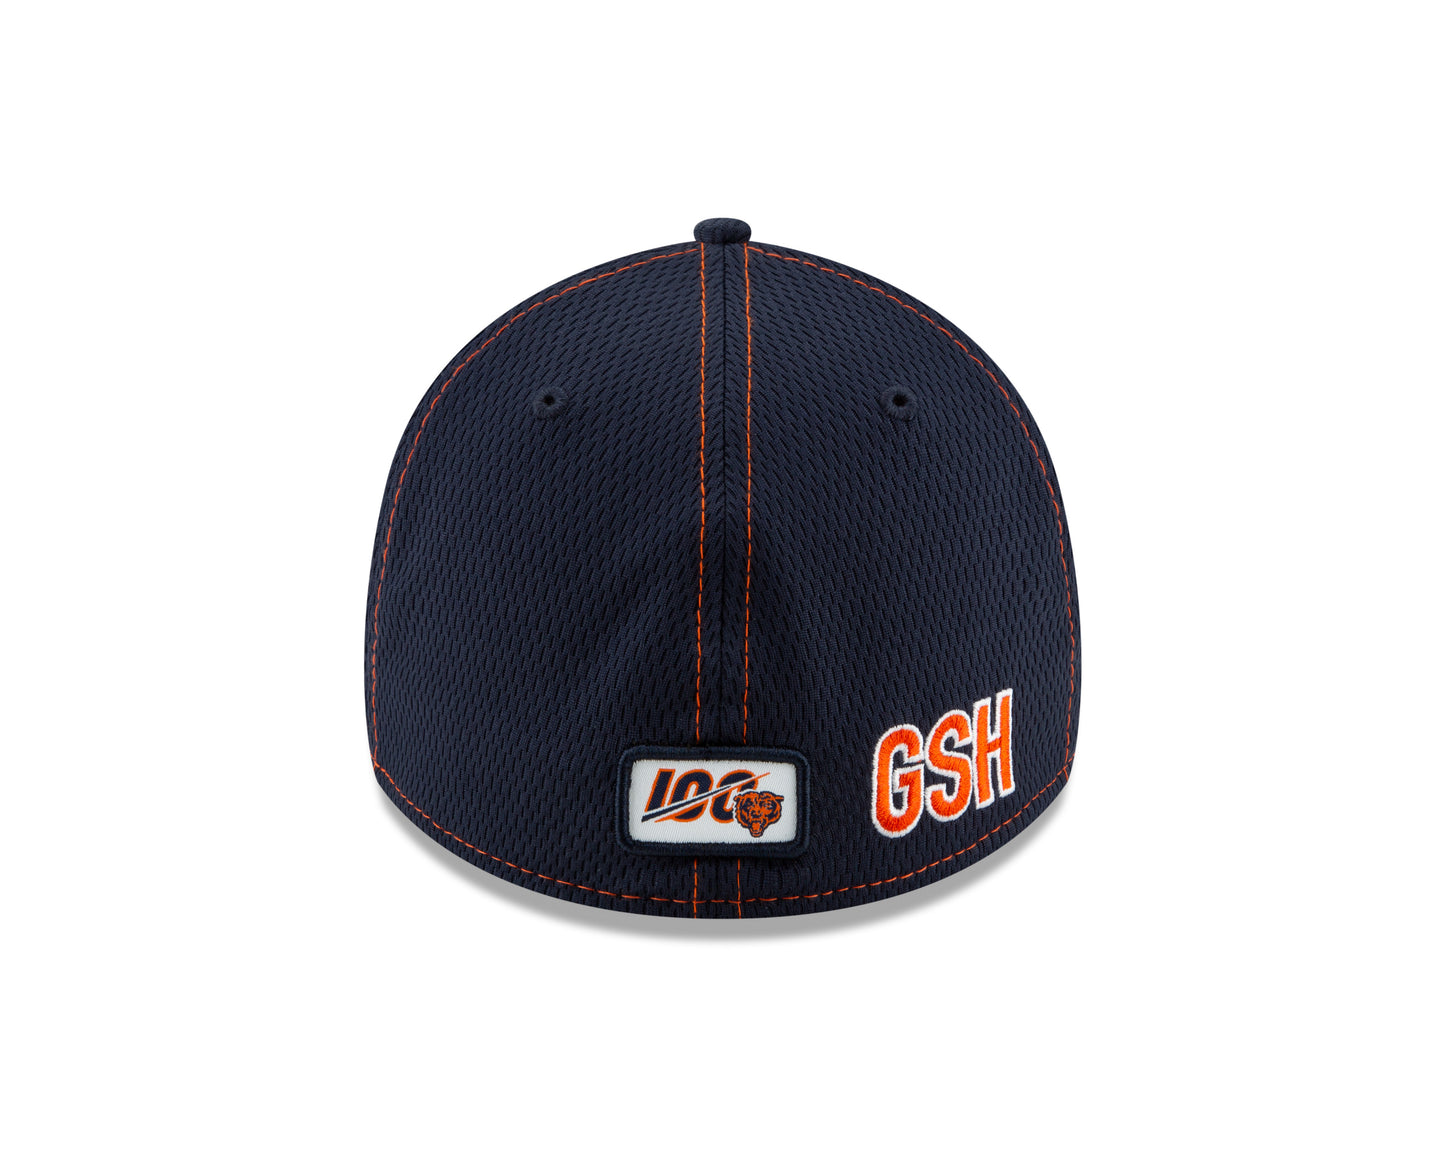 Chicago Bears 2019 Established Collection Sideline Road "C" Logo 39THIRTY Flex Hat